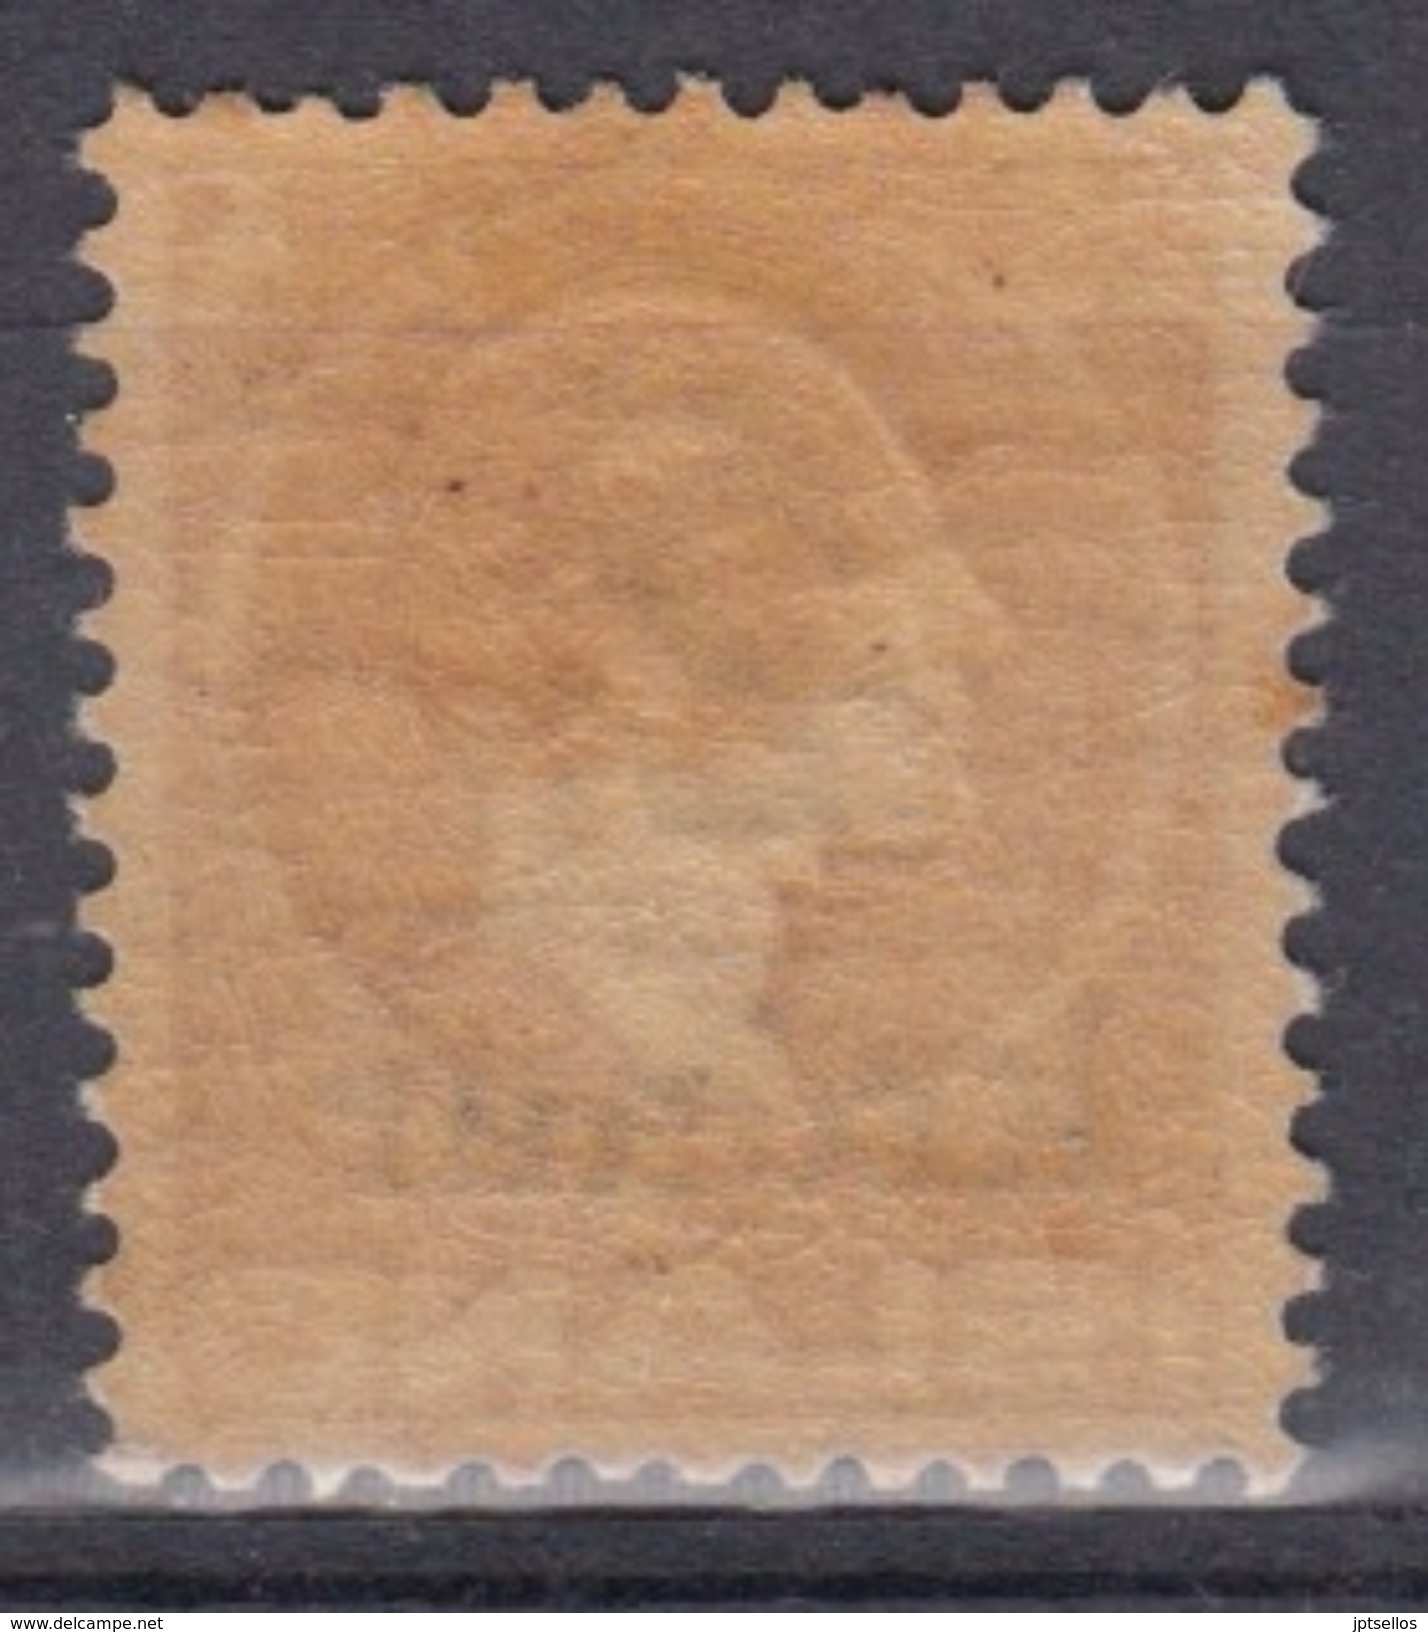 ISLANDIA 1924/26 Nº 110 NUEVO - Used Stamps